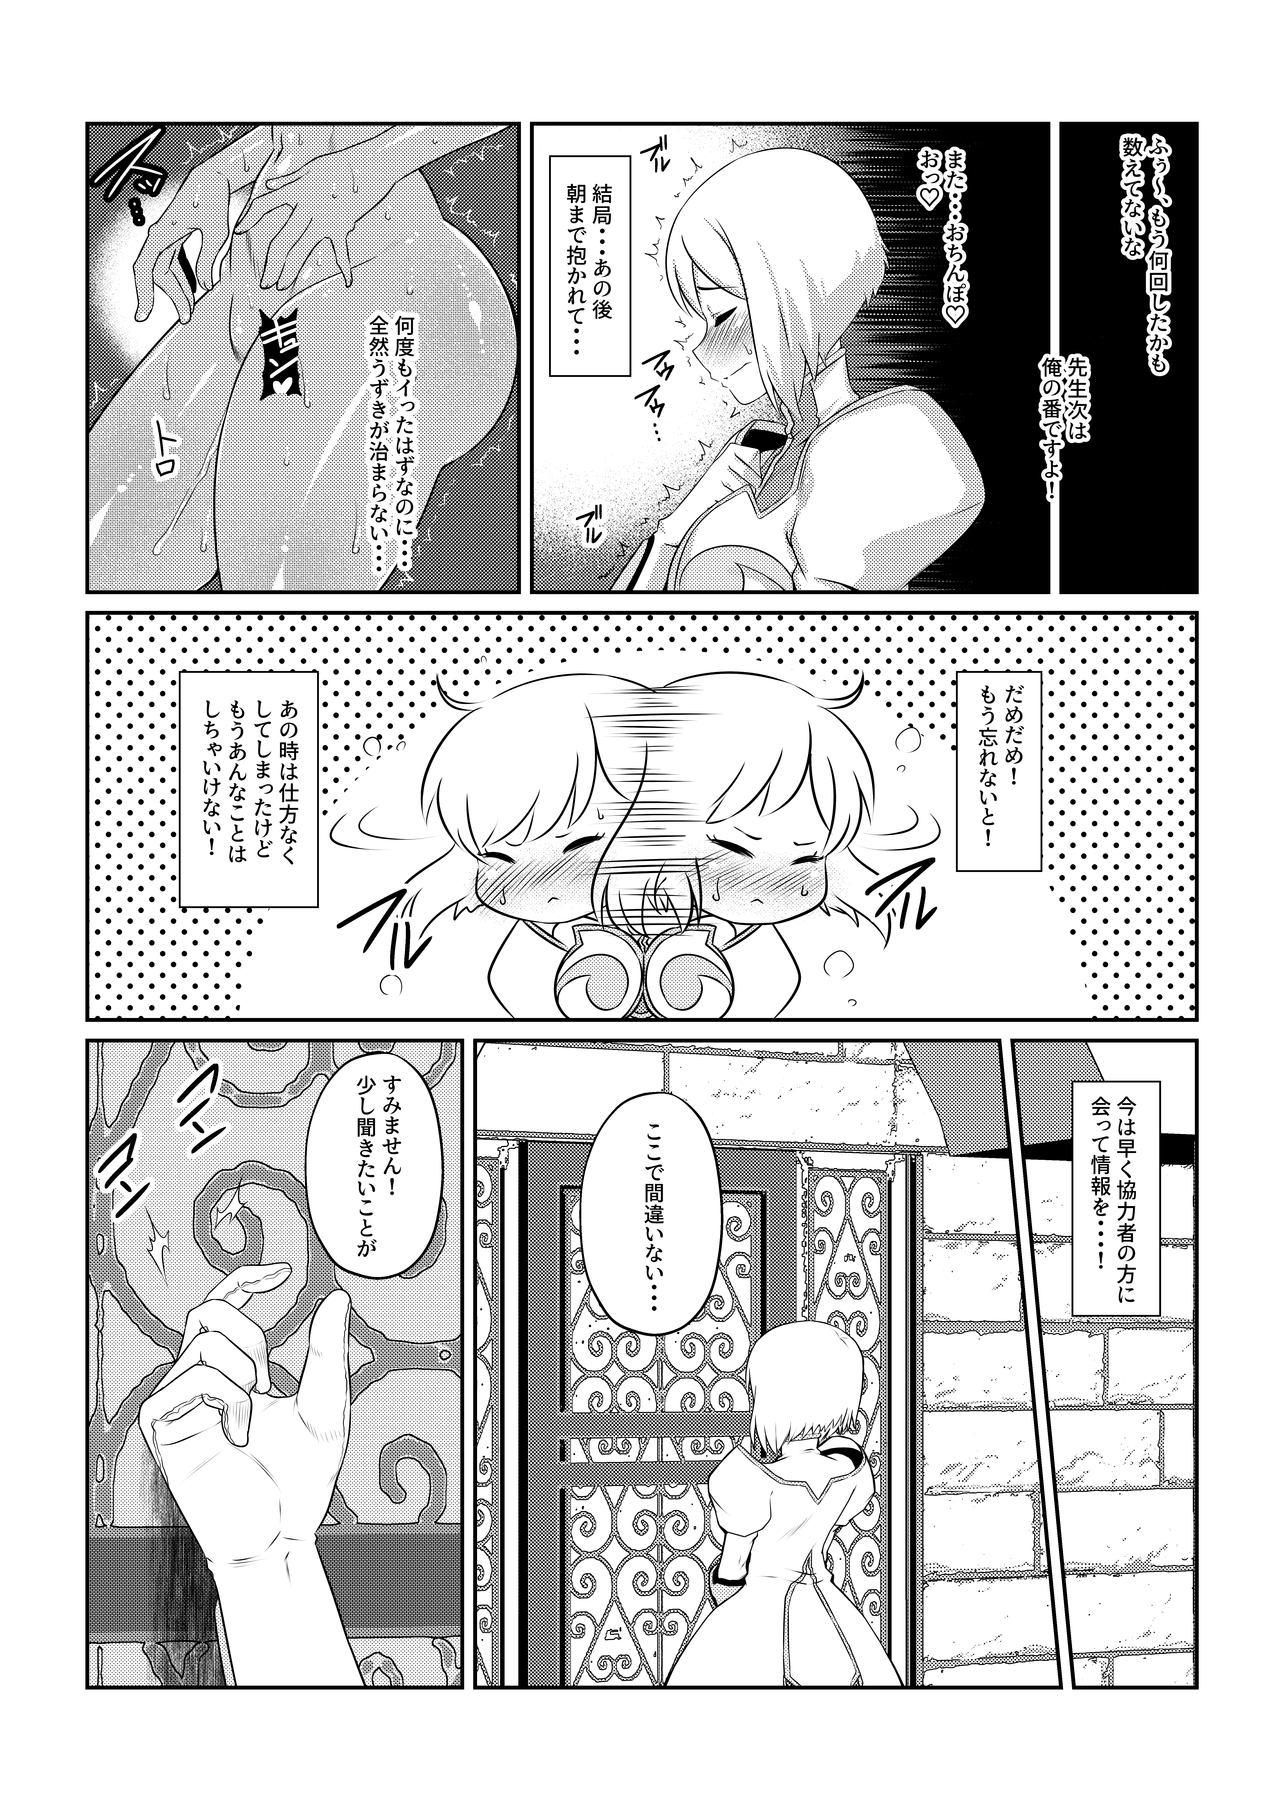 Pasivo Gekka Midarezaki - Tales of vesperia Exhibition - Page 8